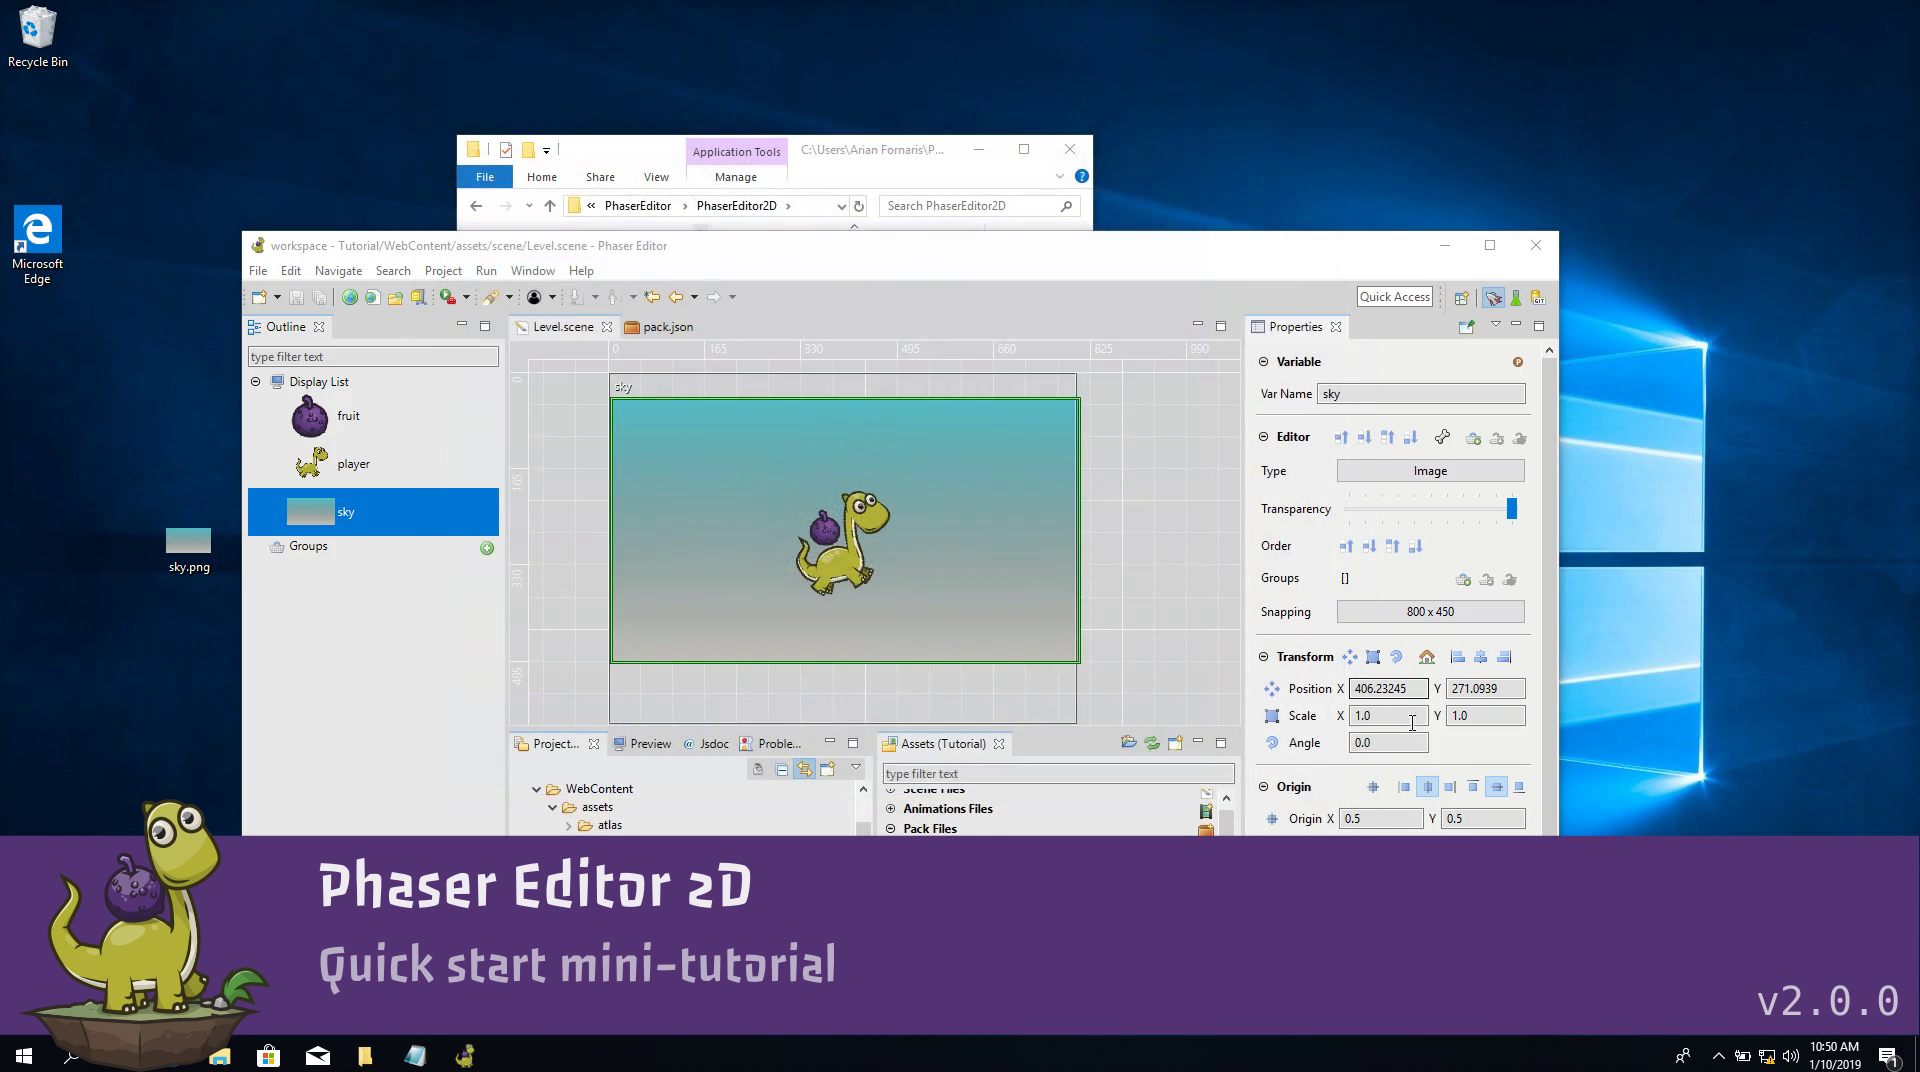 Start with Phaser Editor v2 mini-tutorial